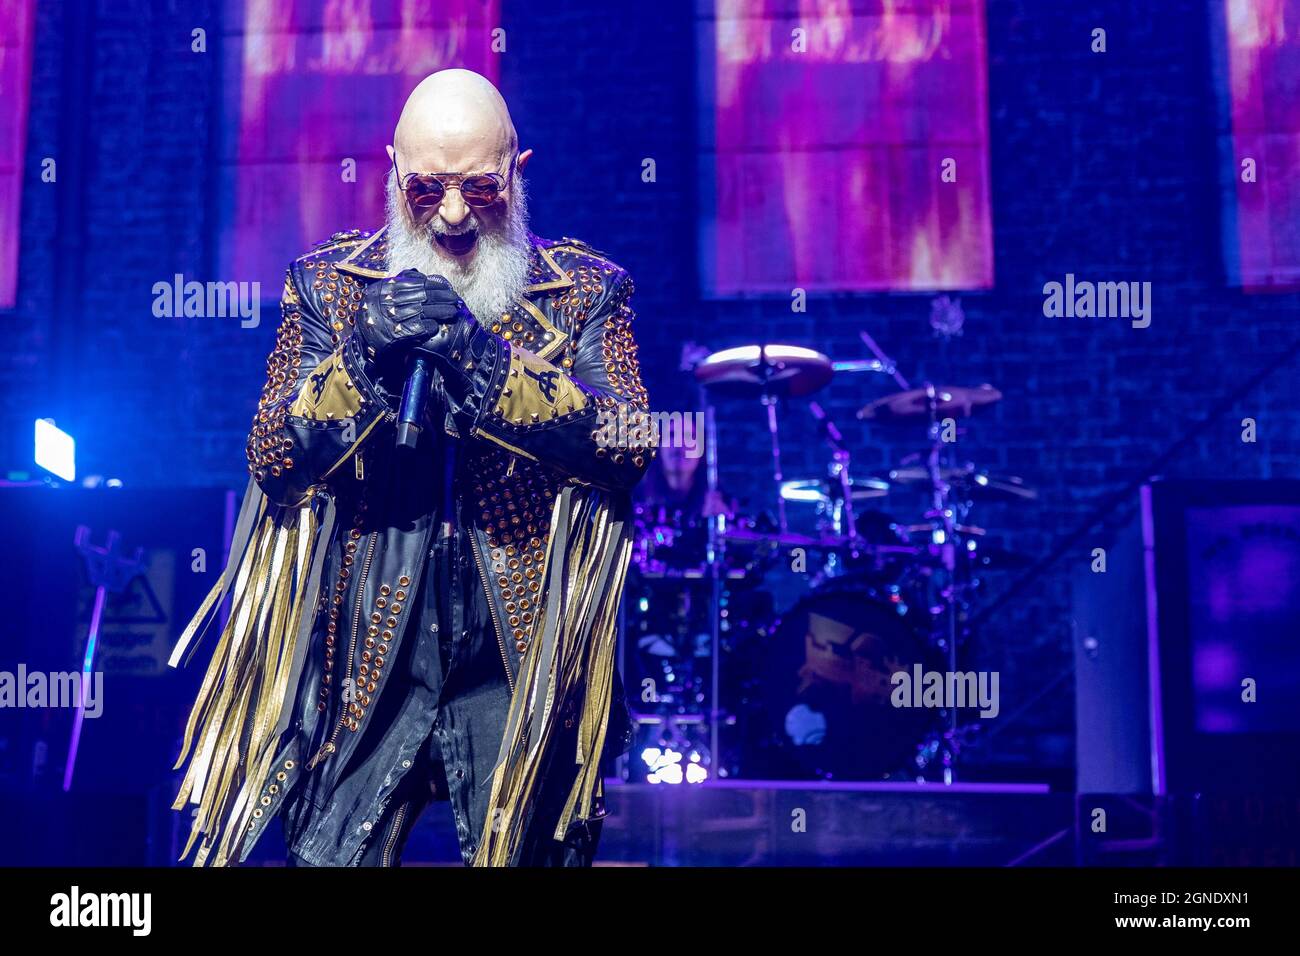 Milwaukee, USA. September 2021. Rob Halford von Judas Priest am 22. September 2021 im Miller High Life Theatre in Milwaukee, Wisconsin (Foto: Daniel DeSlover/Sipa USA) Quelle: SIPA USA/Alamy Live News Stockfoto